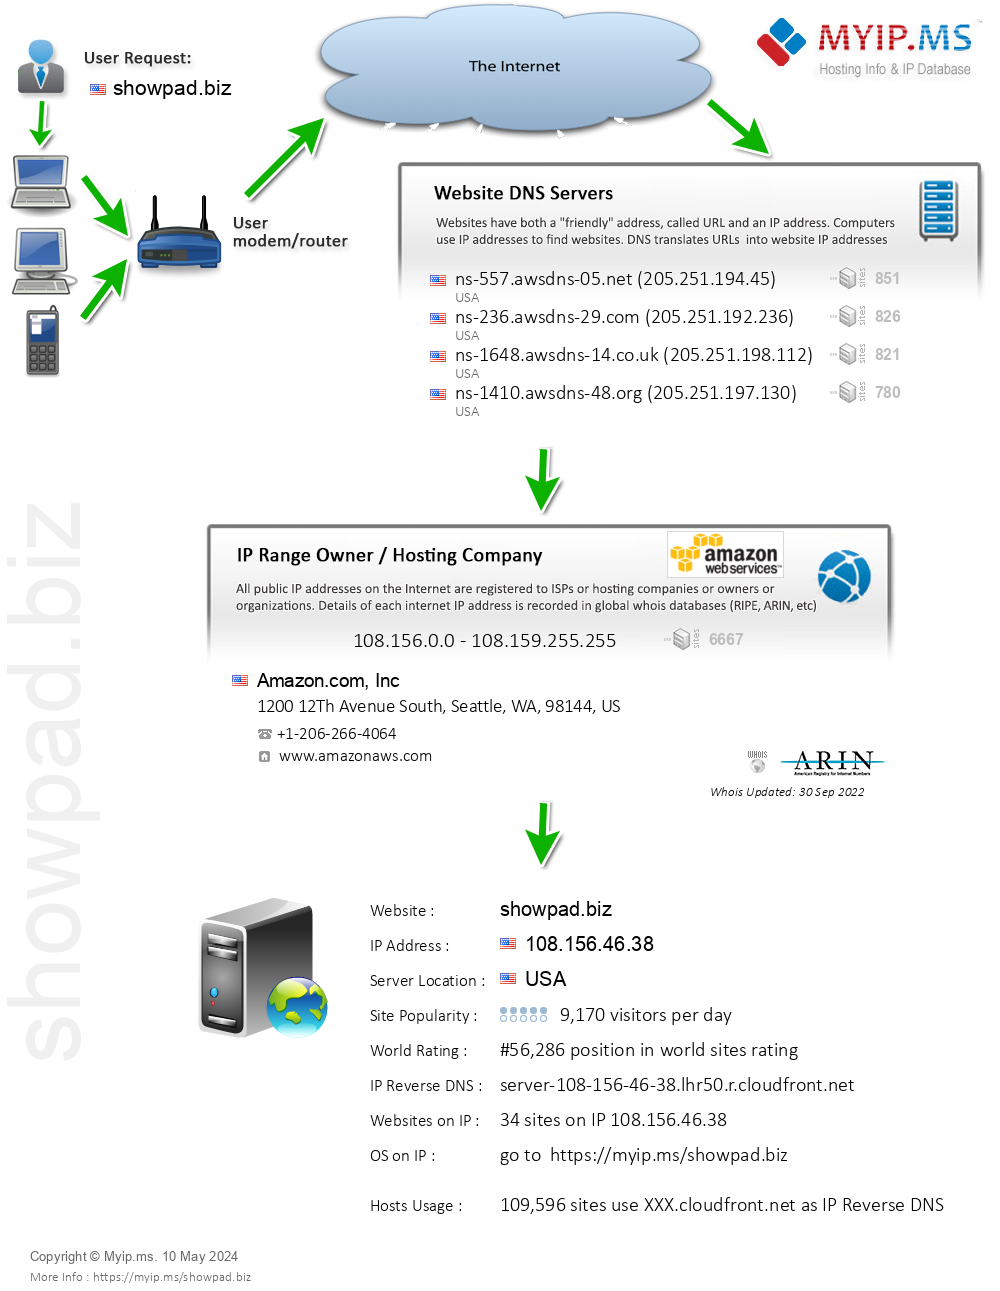 Showpad.biz - Website Hosting Visual IP Diagram